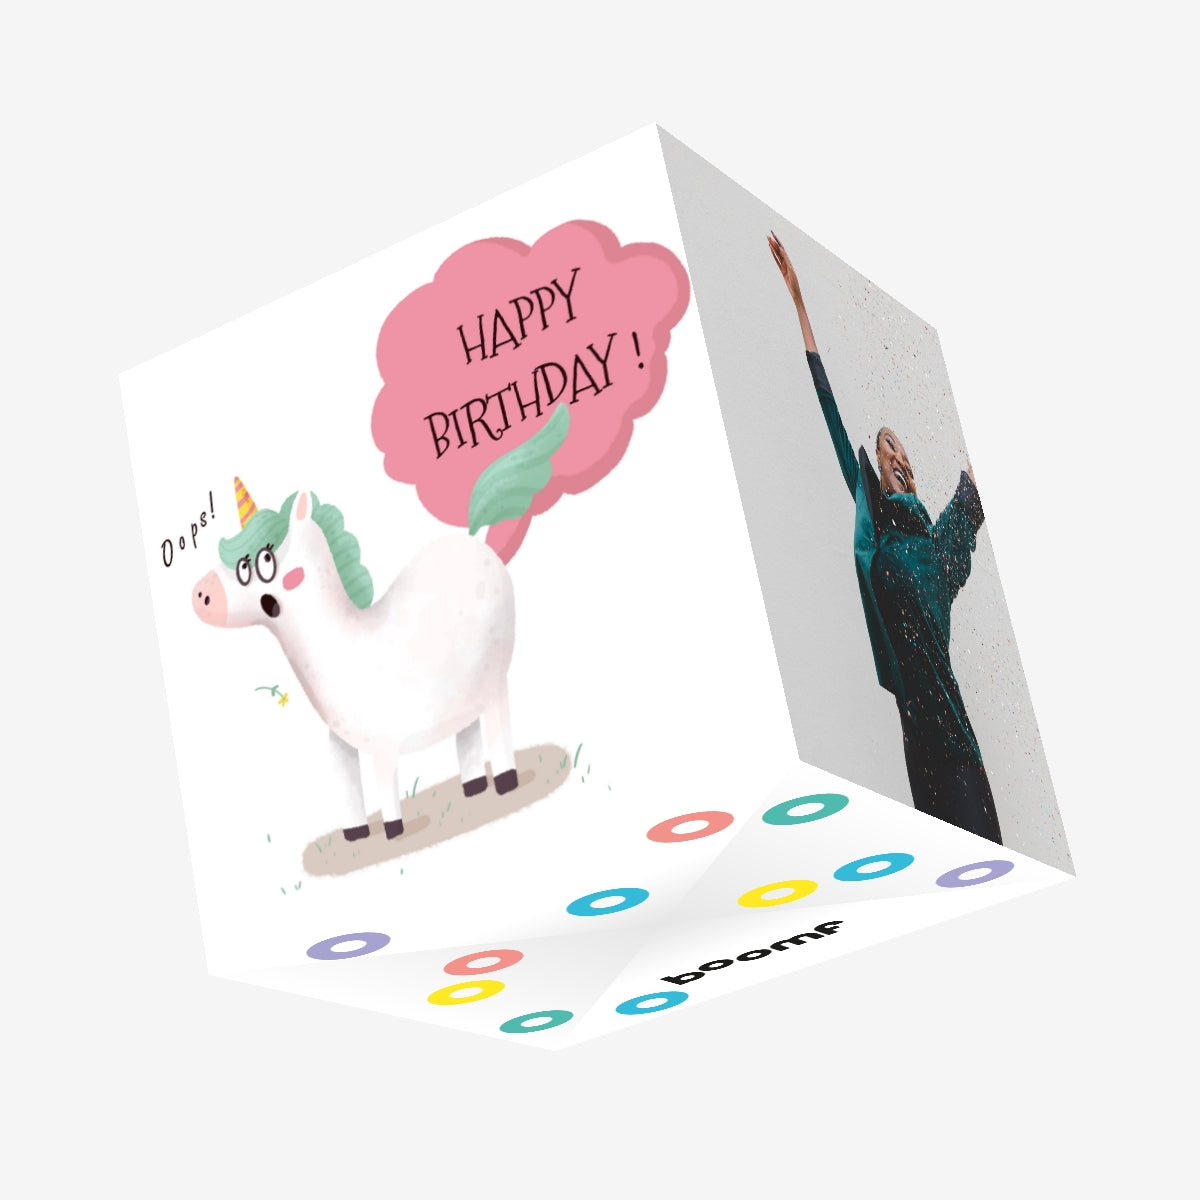 farting unicorn birthday card